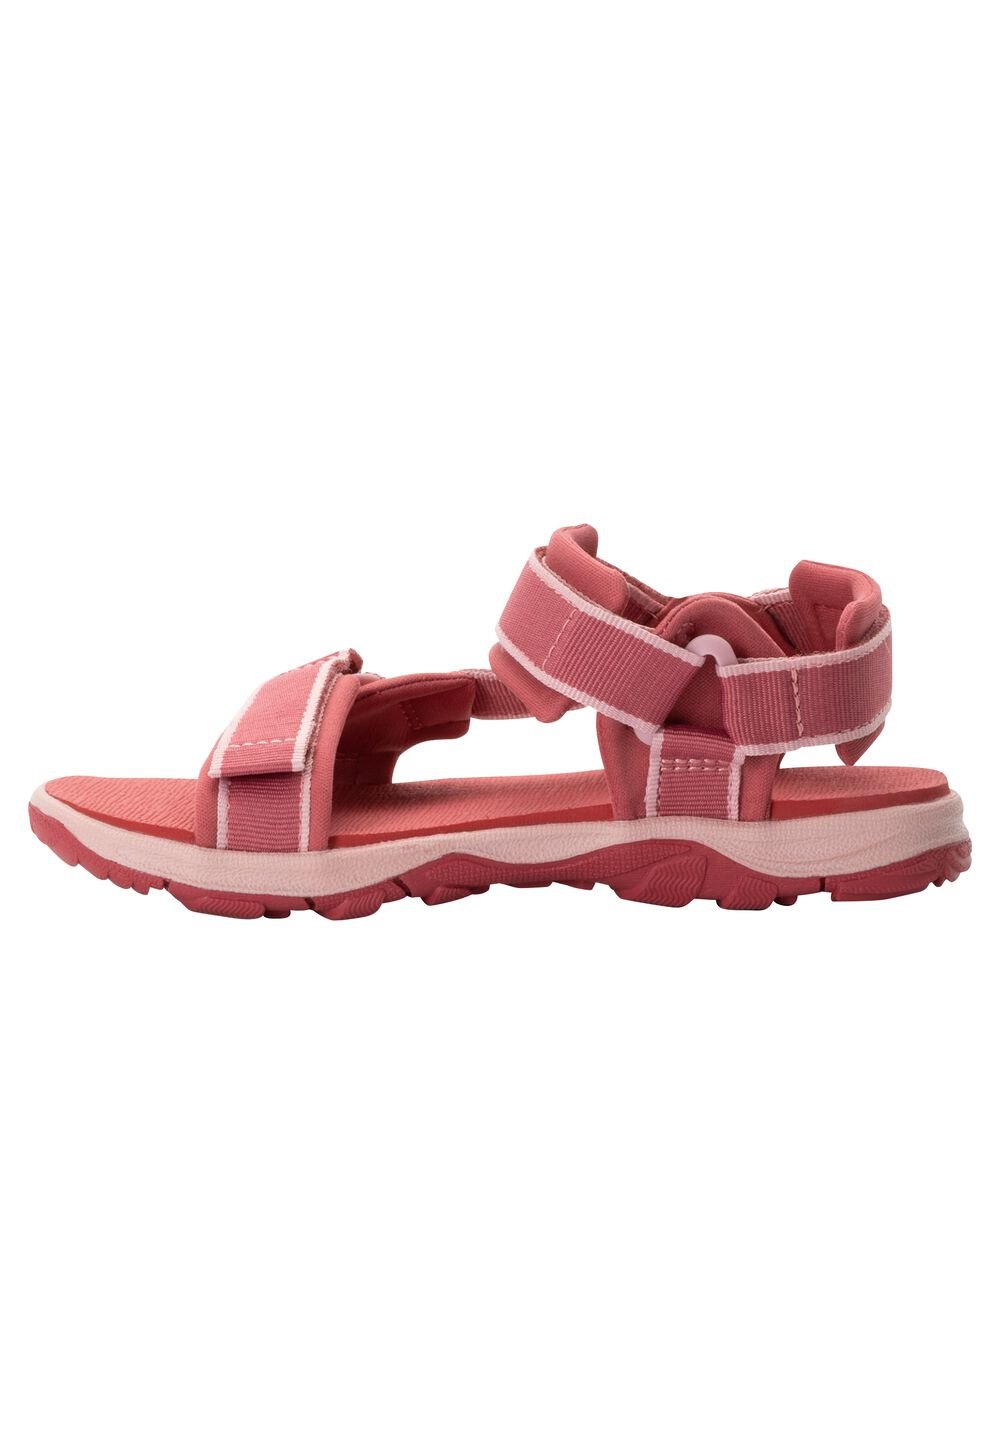 Jack Wolfskin Seven Seas 3 Kids Kinderen sandalen 31 soft pink soft pink